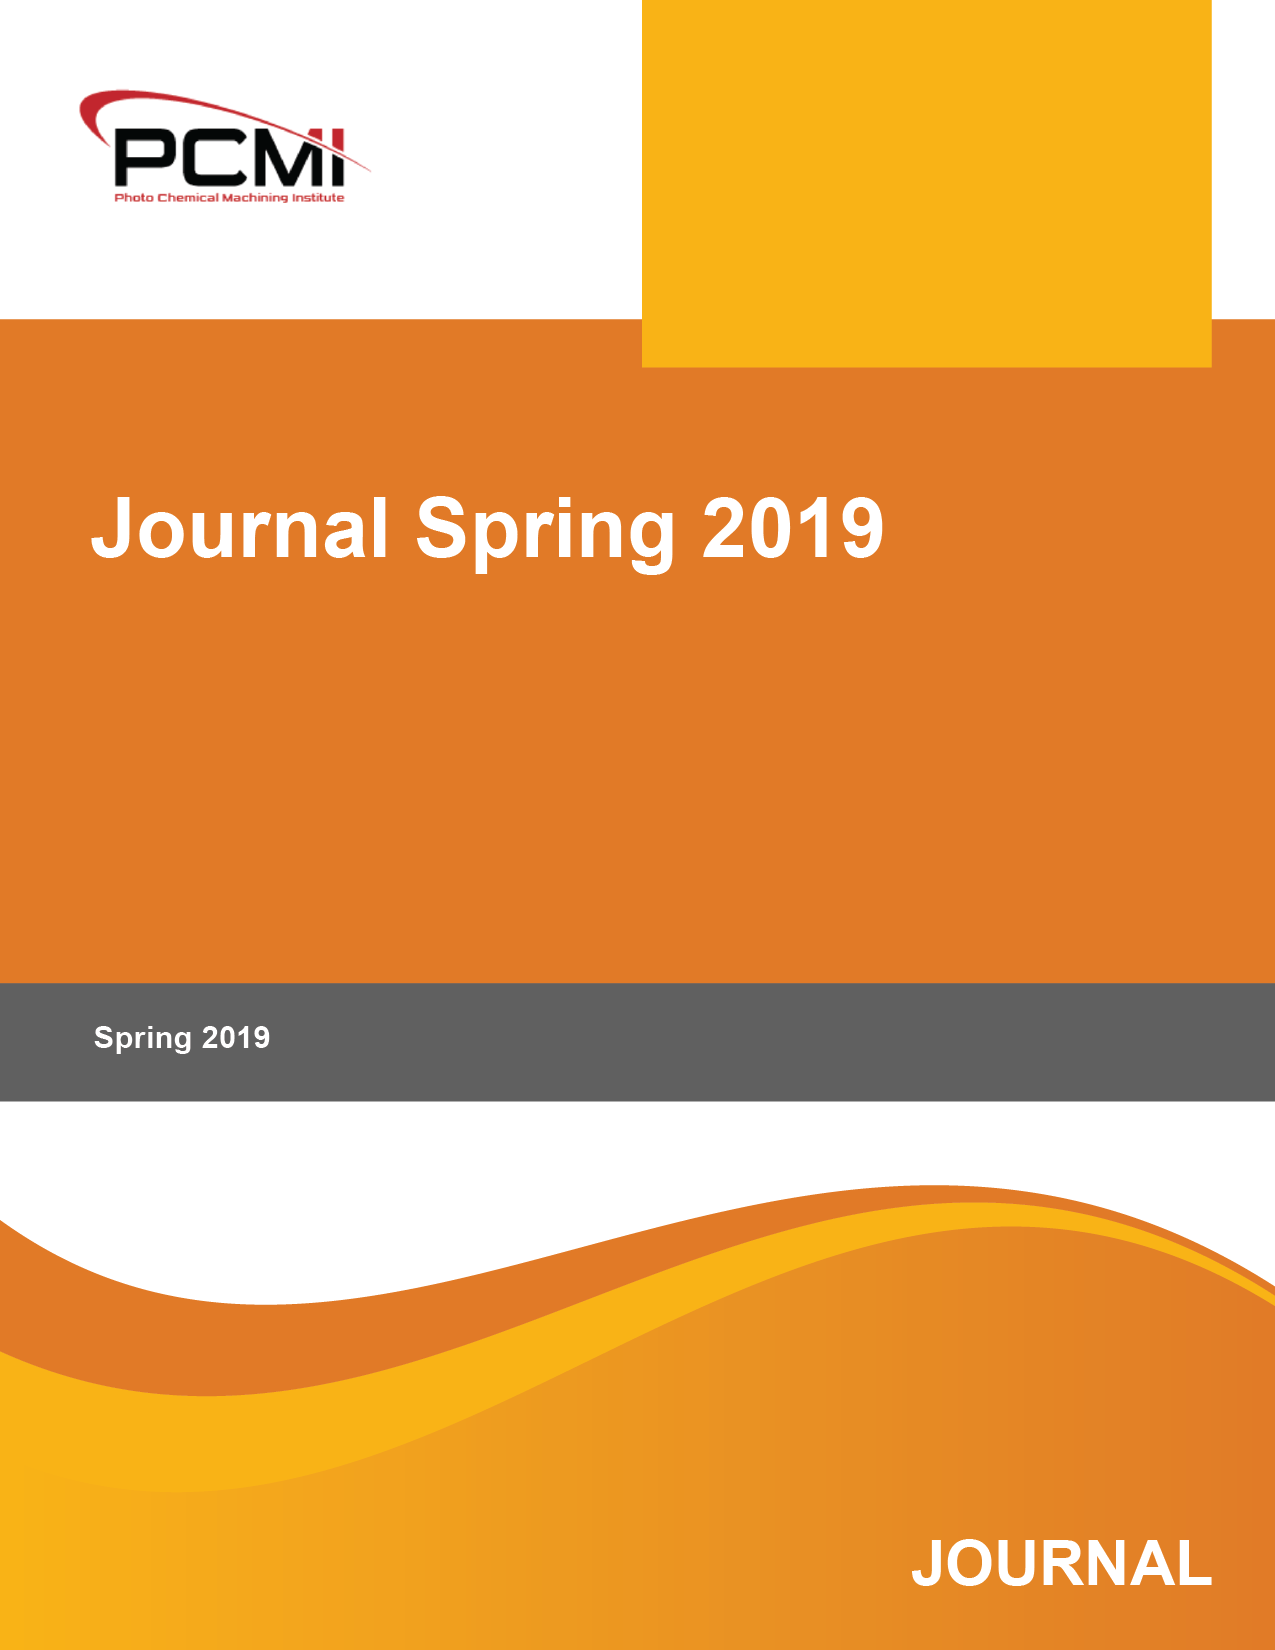 2019 Spring Journal